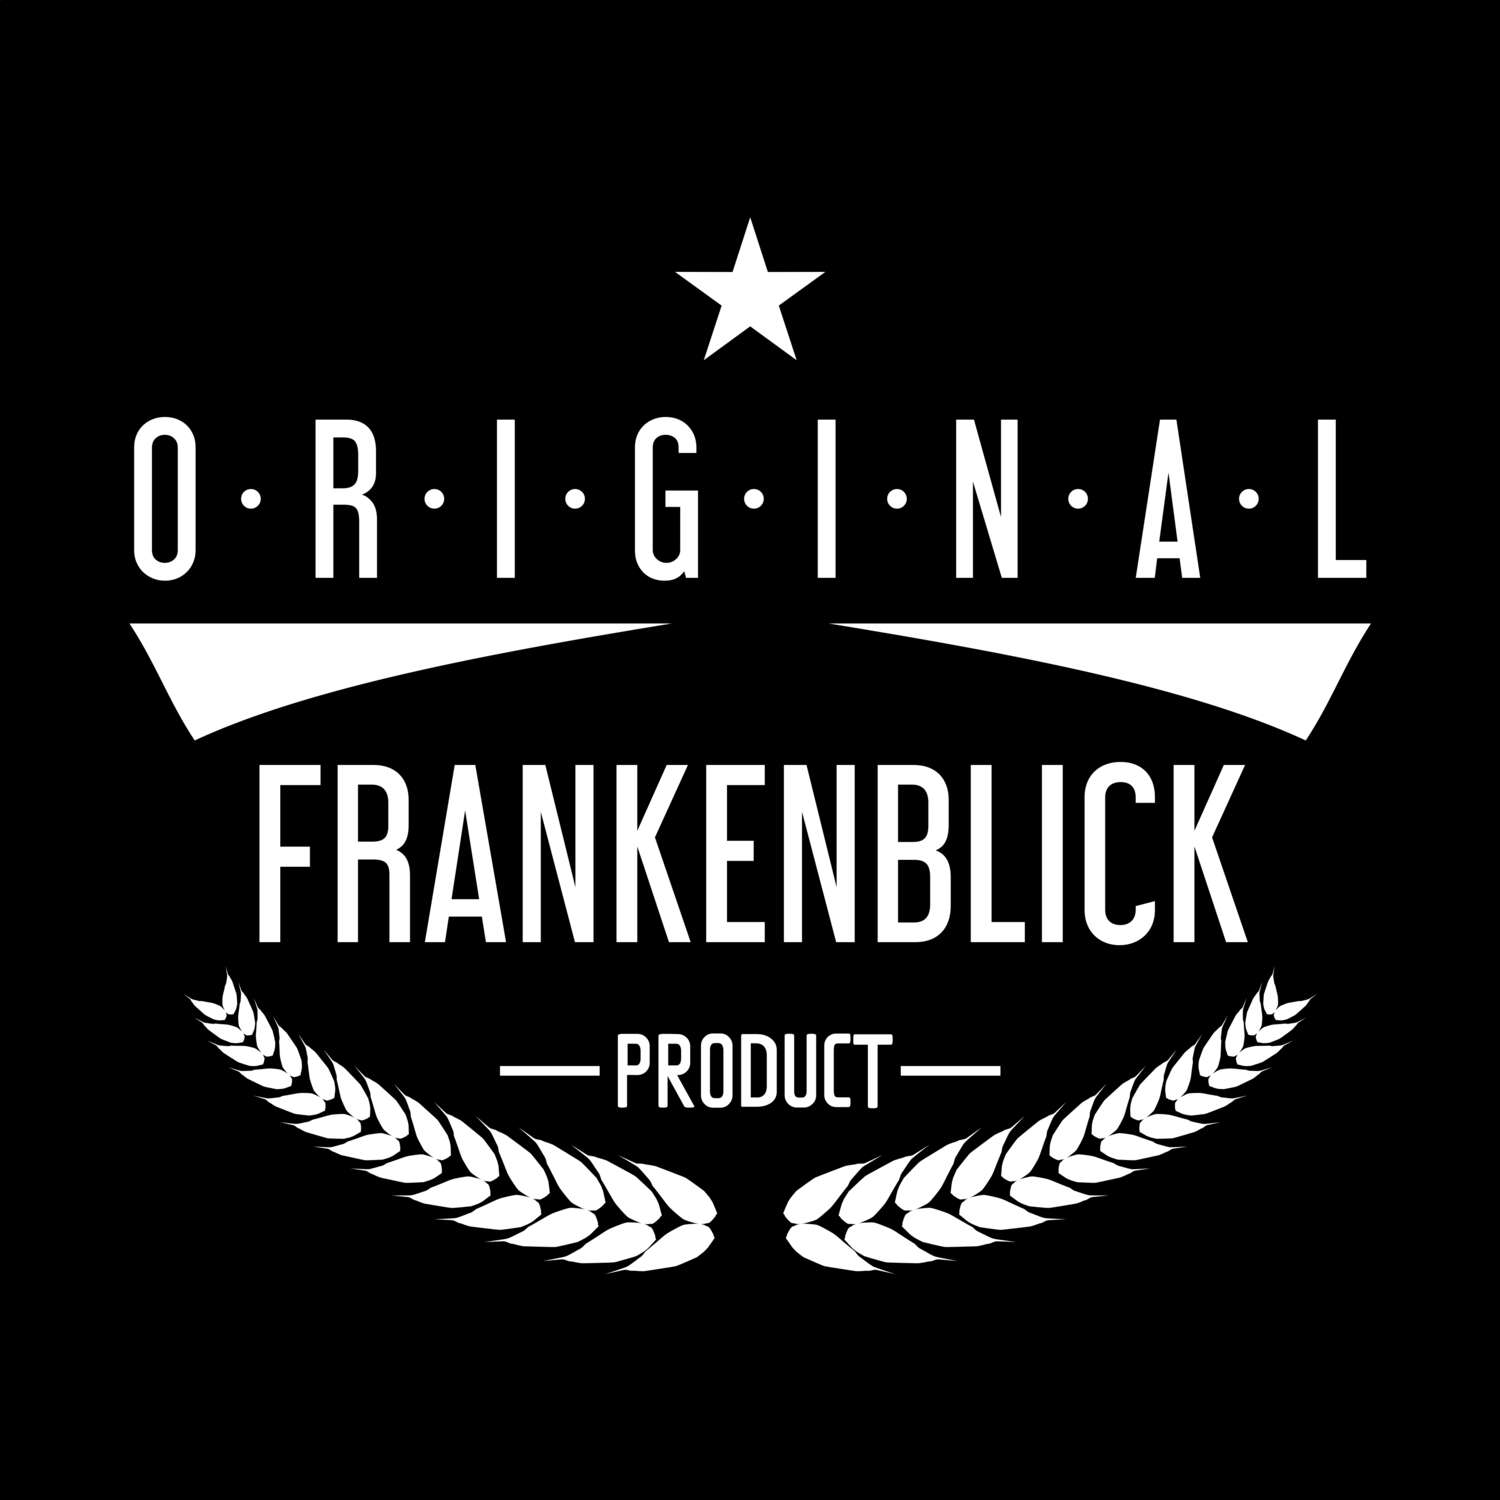 Frankenblick T-Shirt »Original Product«